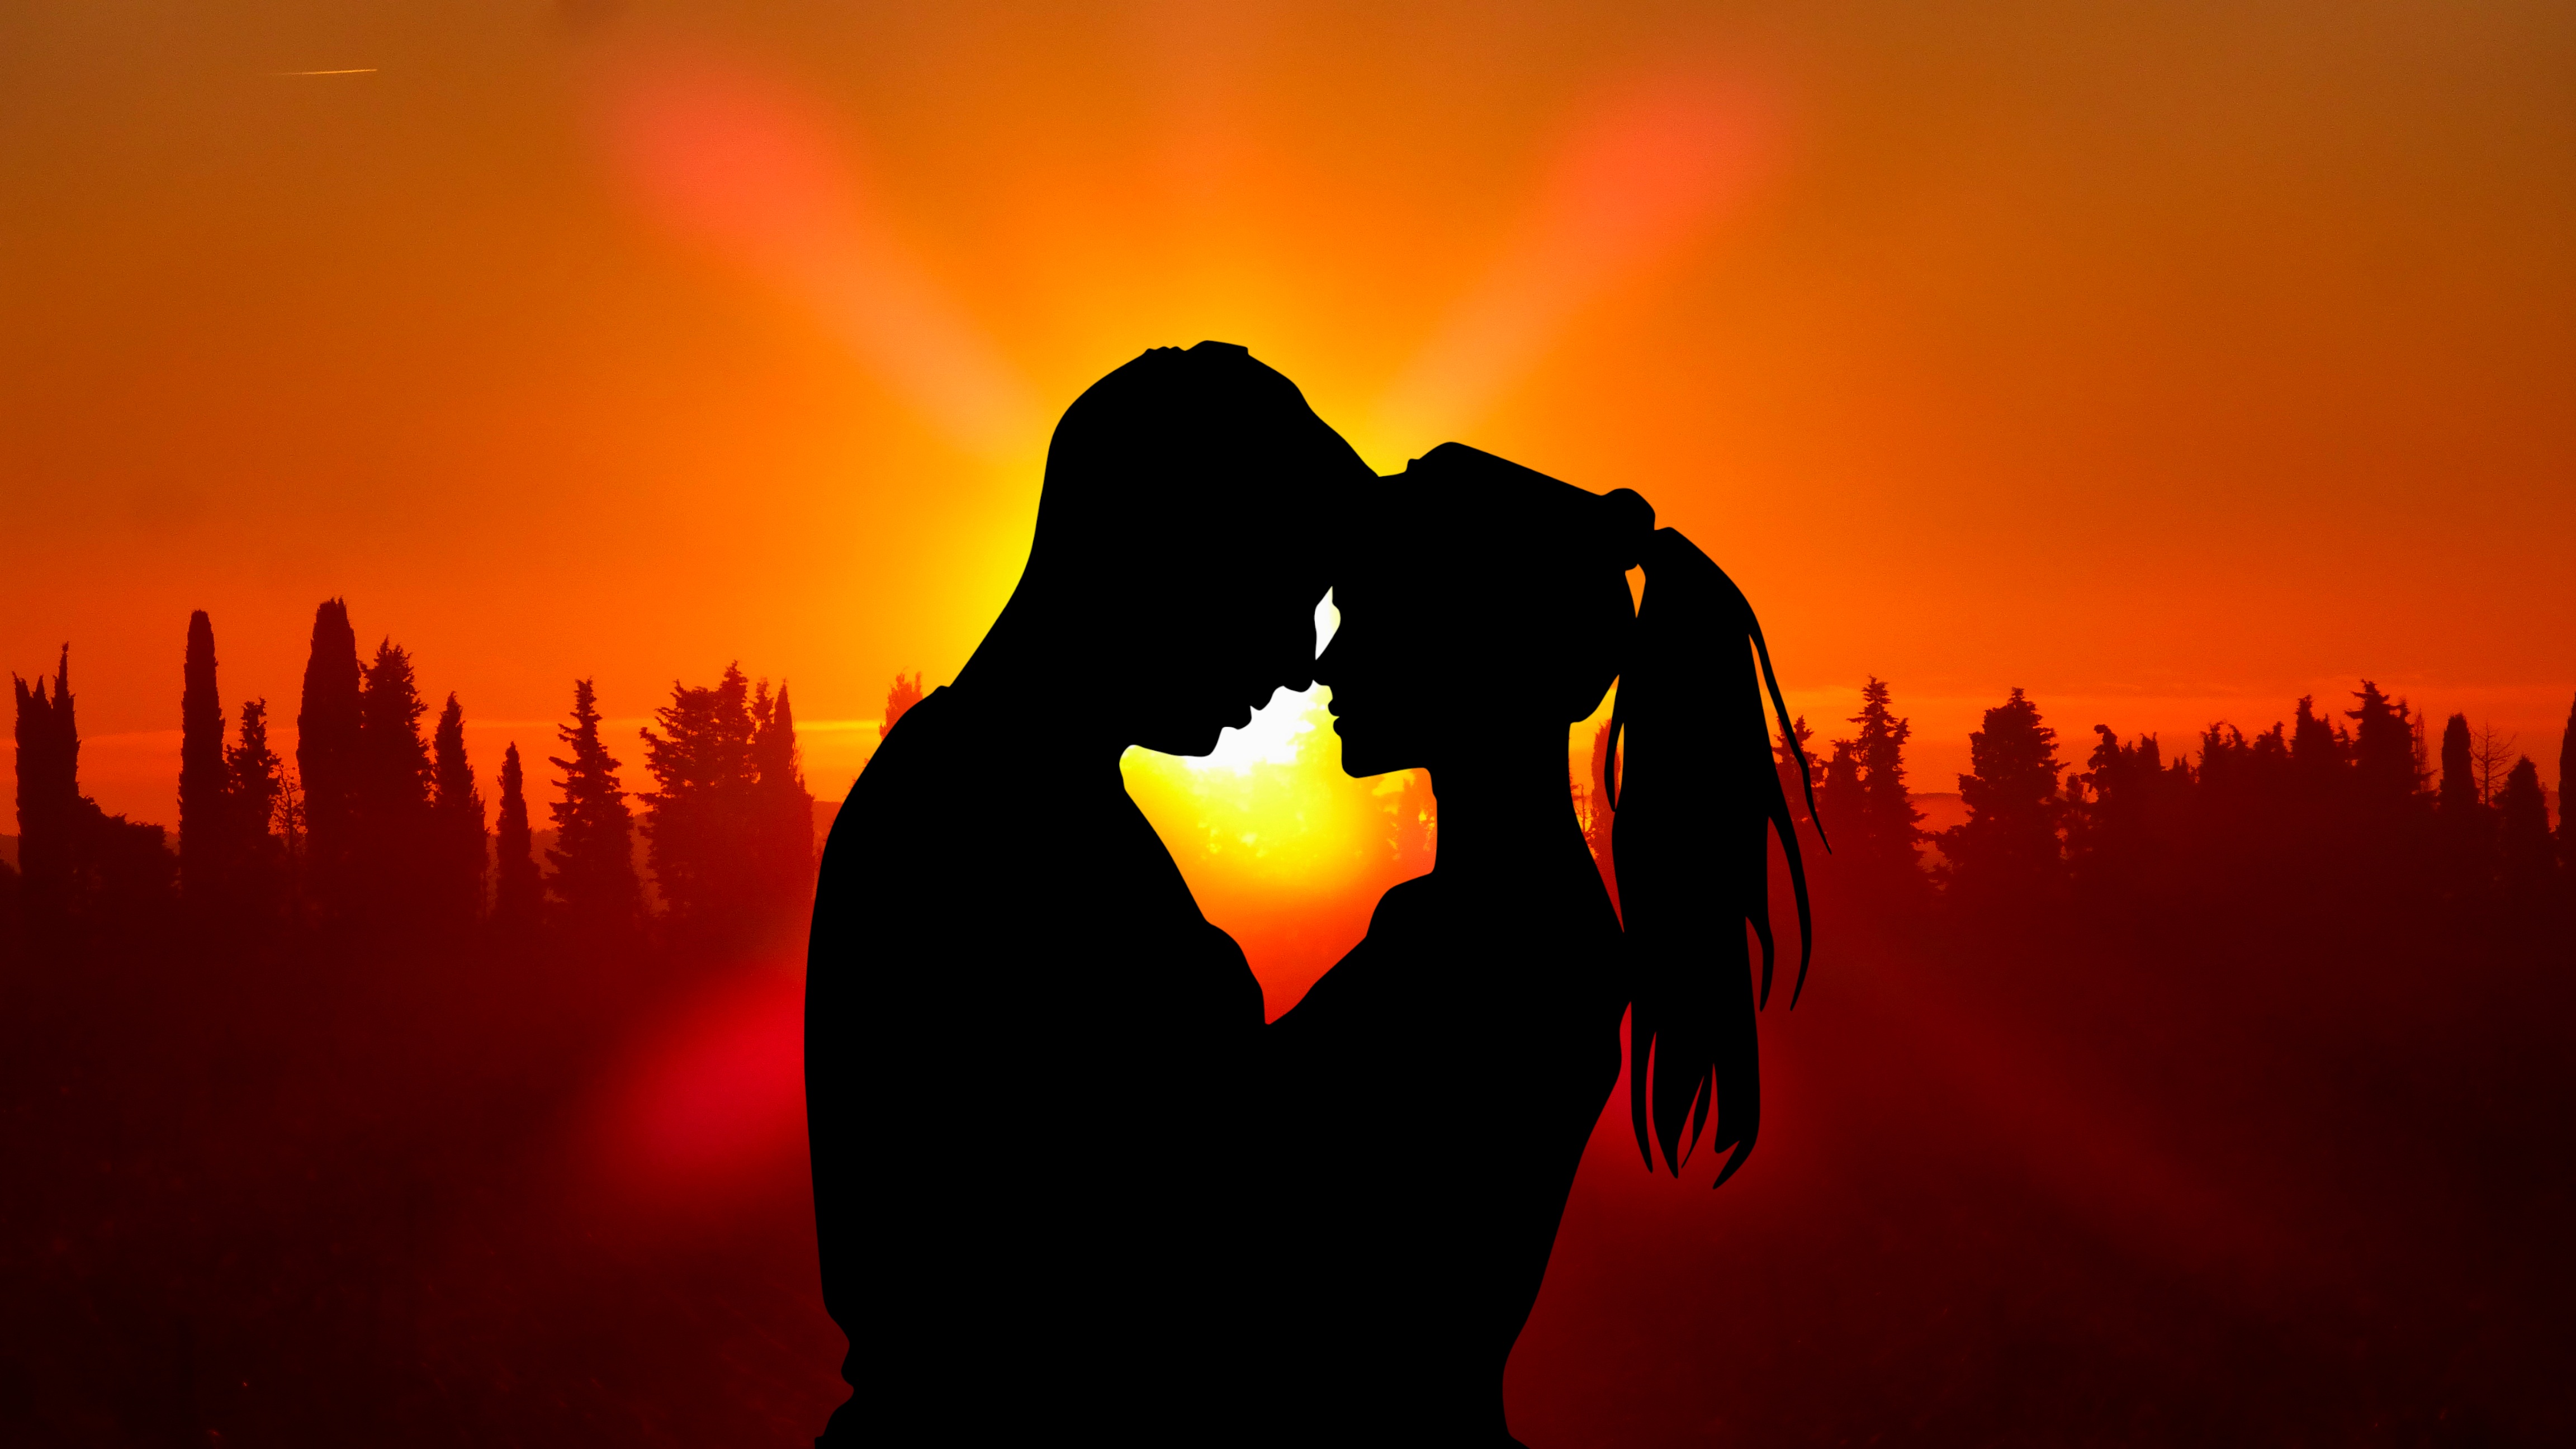 Couple In Love Silhouette